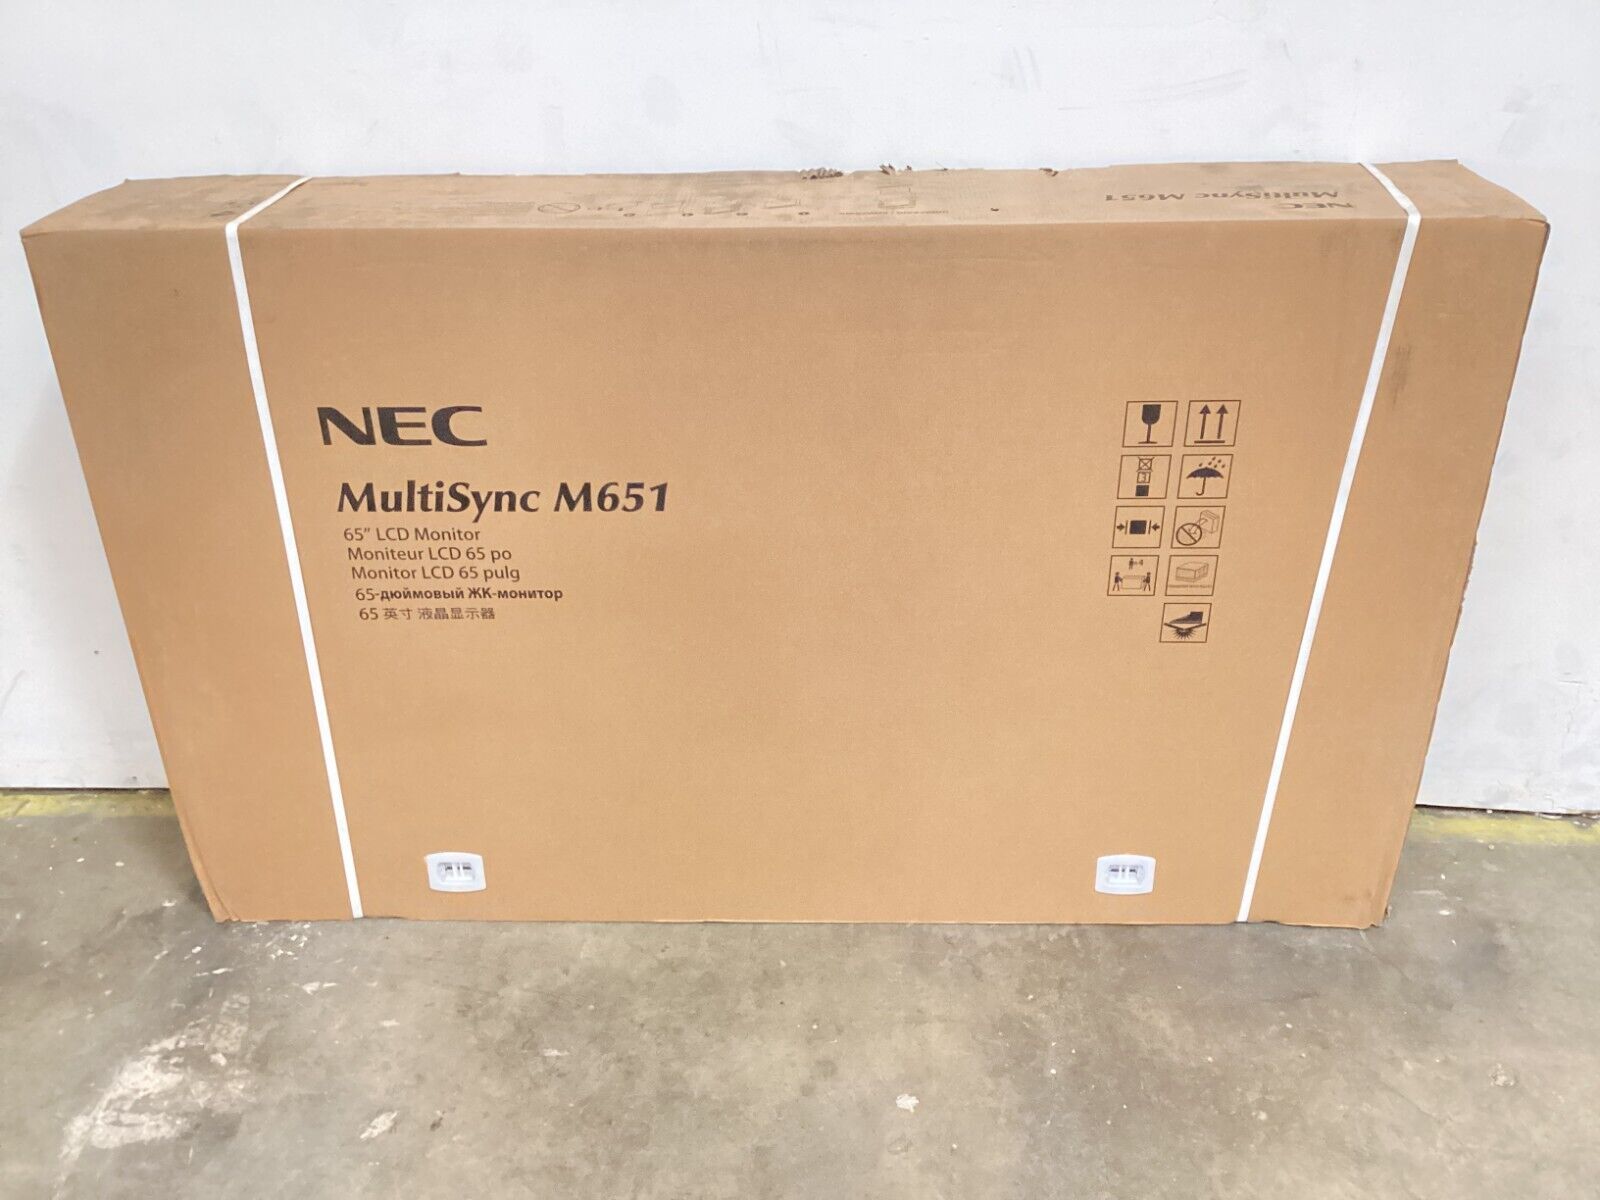 NEC M651 MultiSync 65" 4K UHD LED-backlit LCD Display - Digi